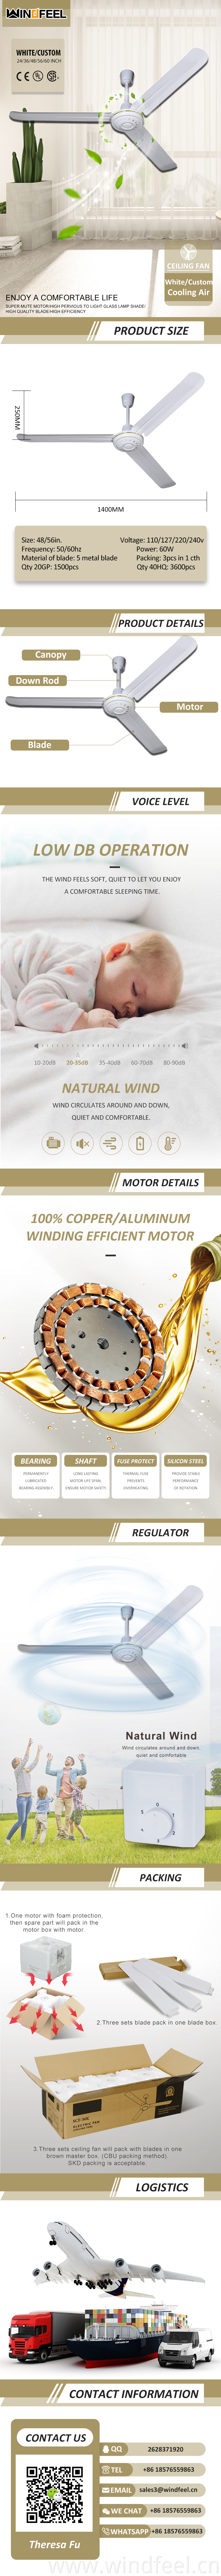 High Quality Factory Ceiling Fan Vitenam Wall Mounted Fan with 100% Copper Motor 3 Metal Blade